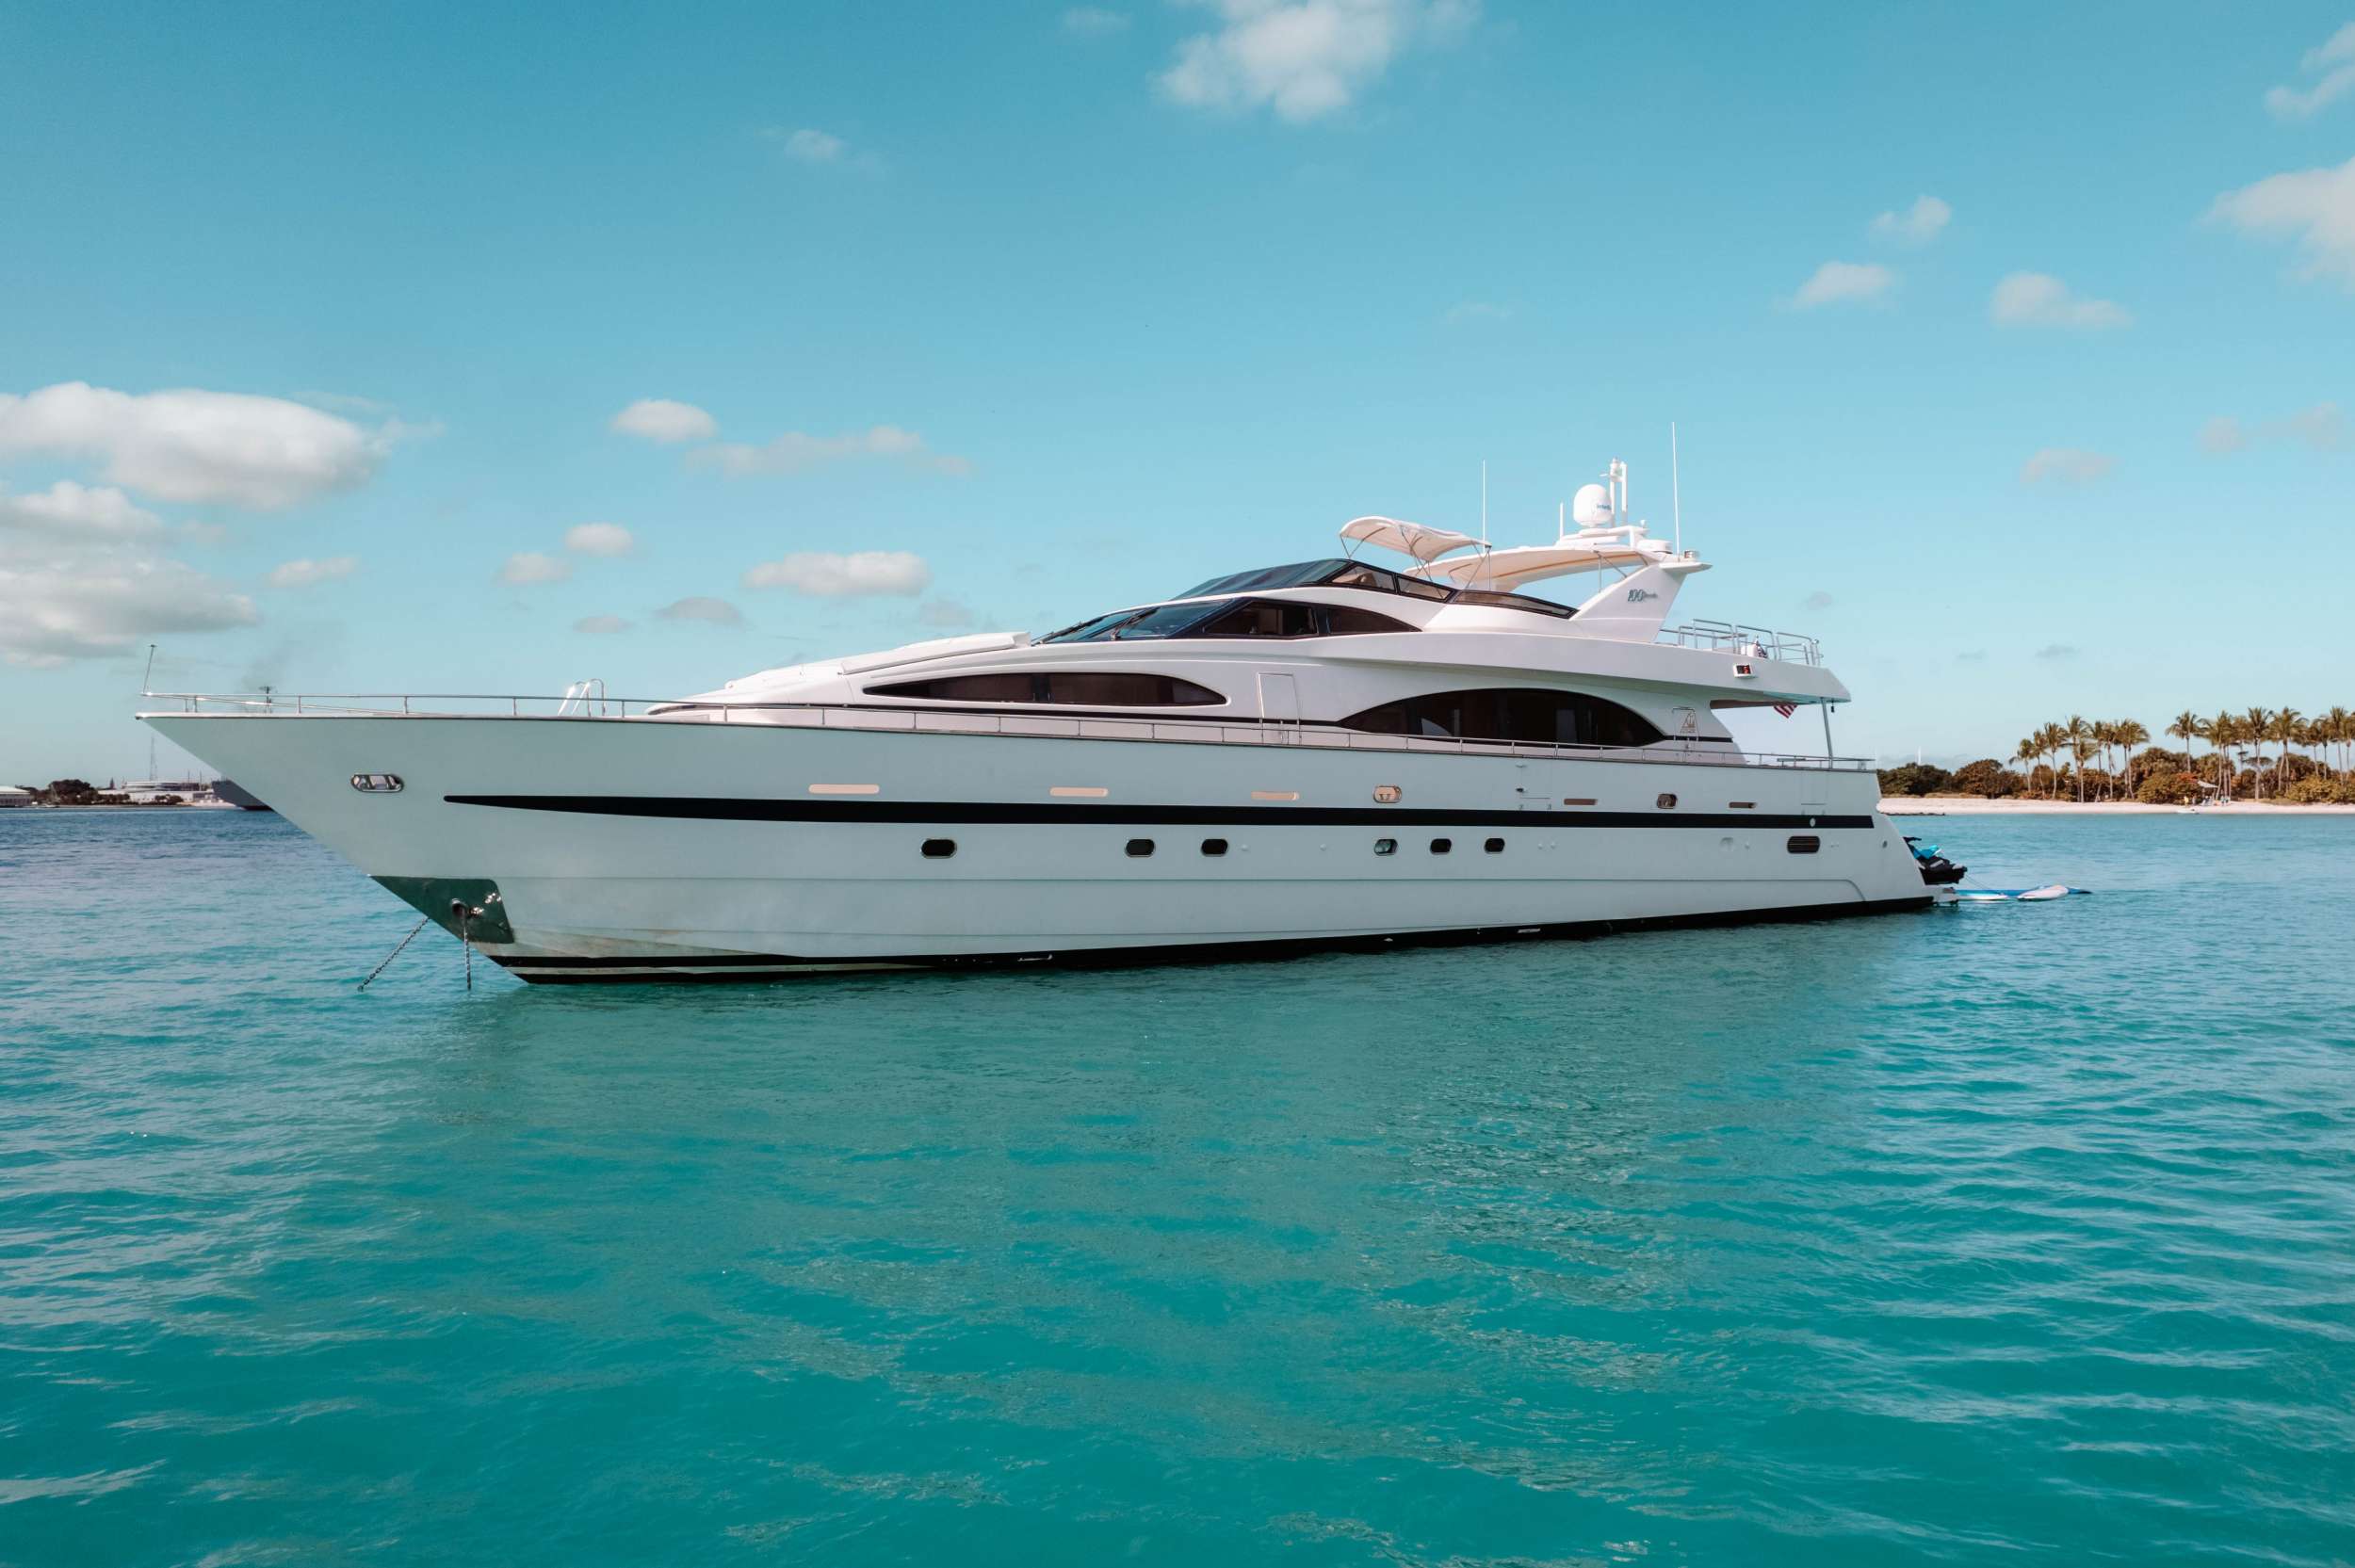 ENDLESS SUN - Yacht Charter Newport & Boat hire in US East Coast & Bahamas 2